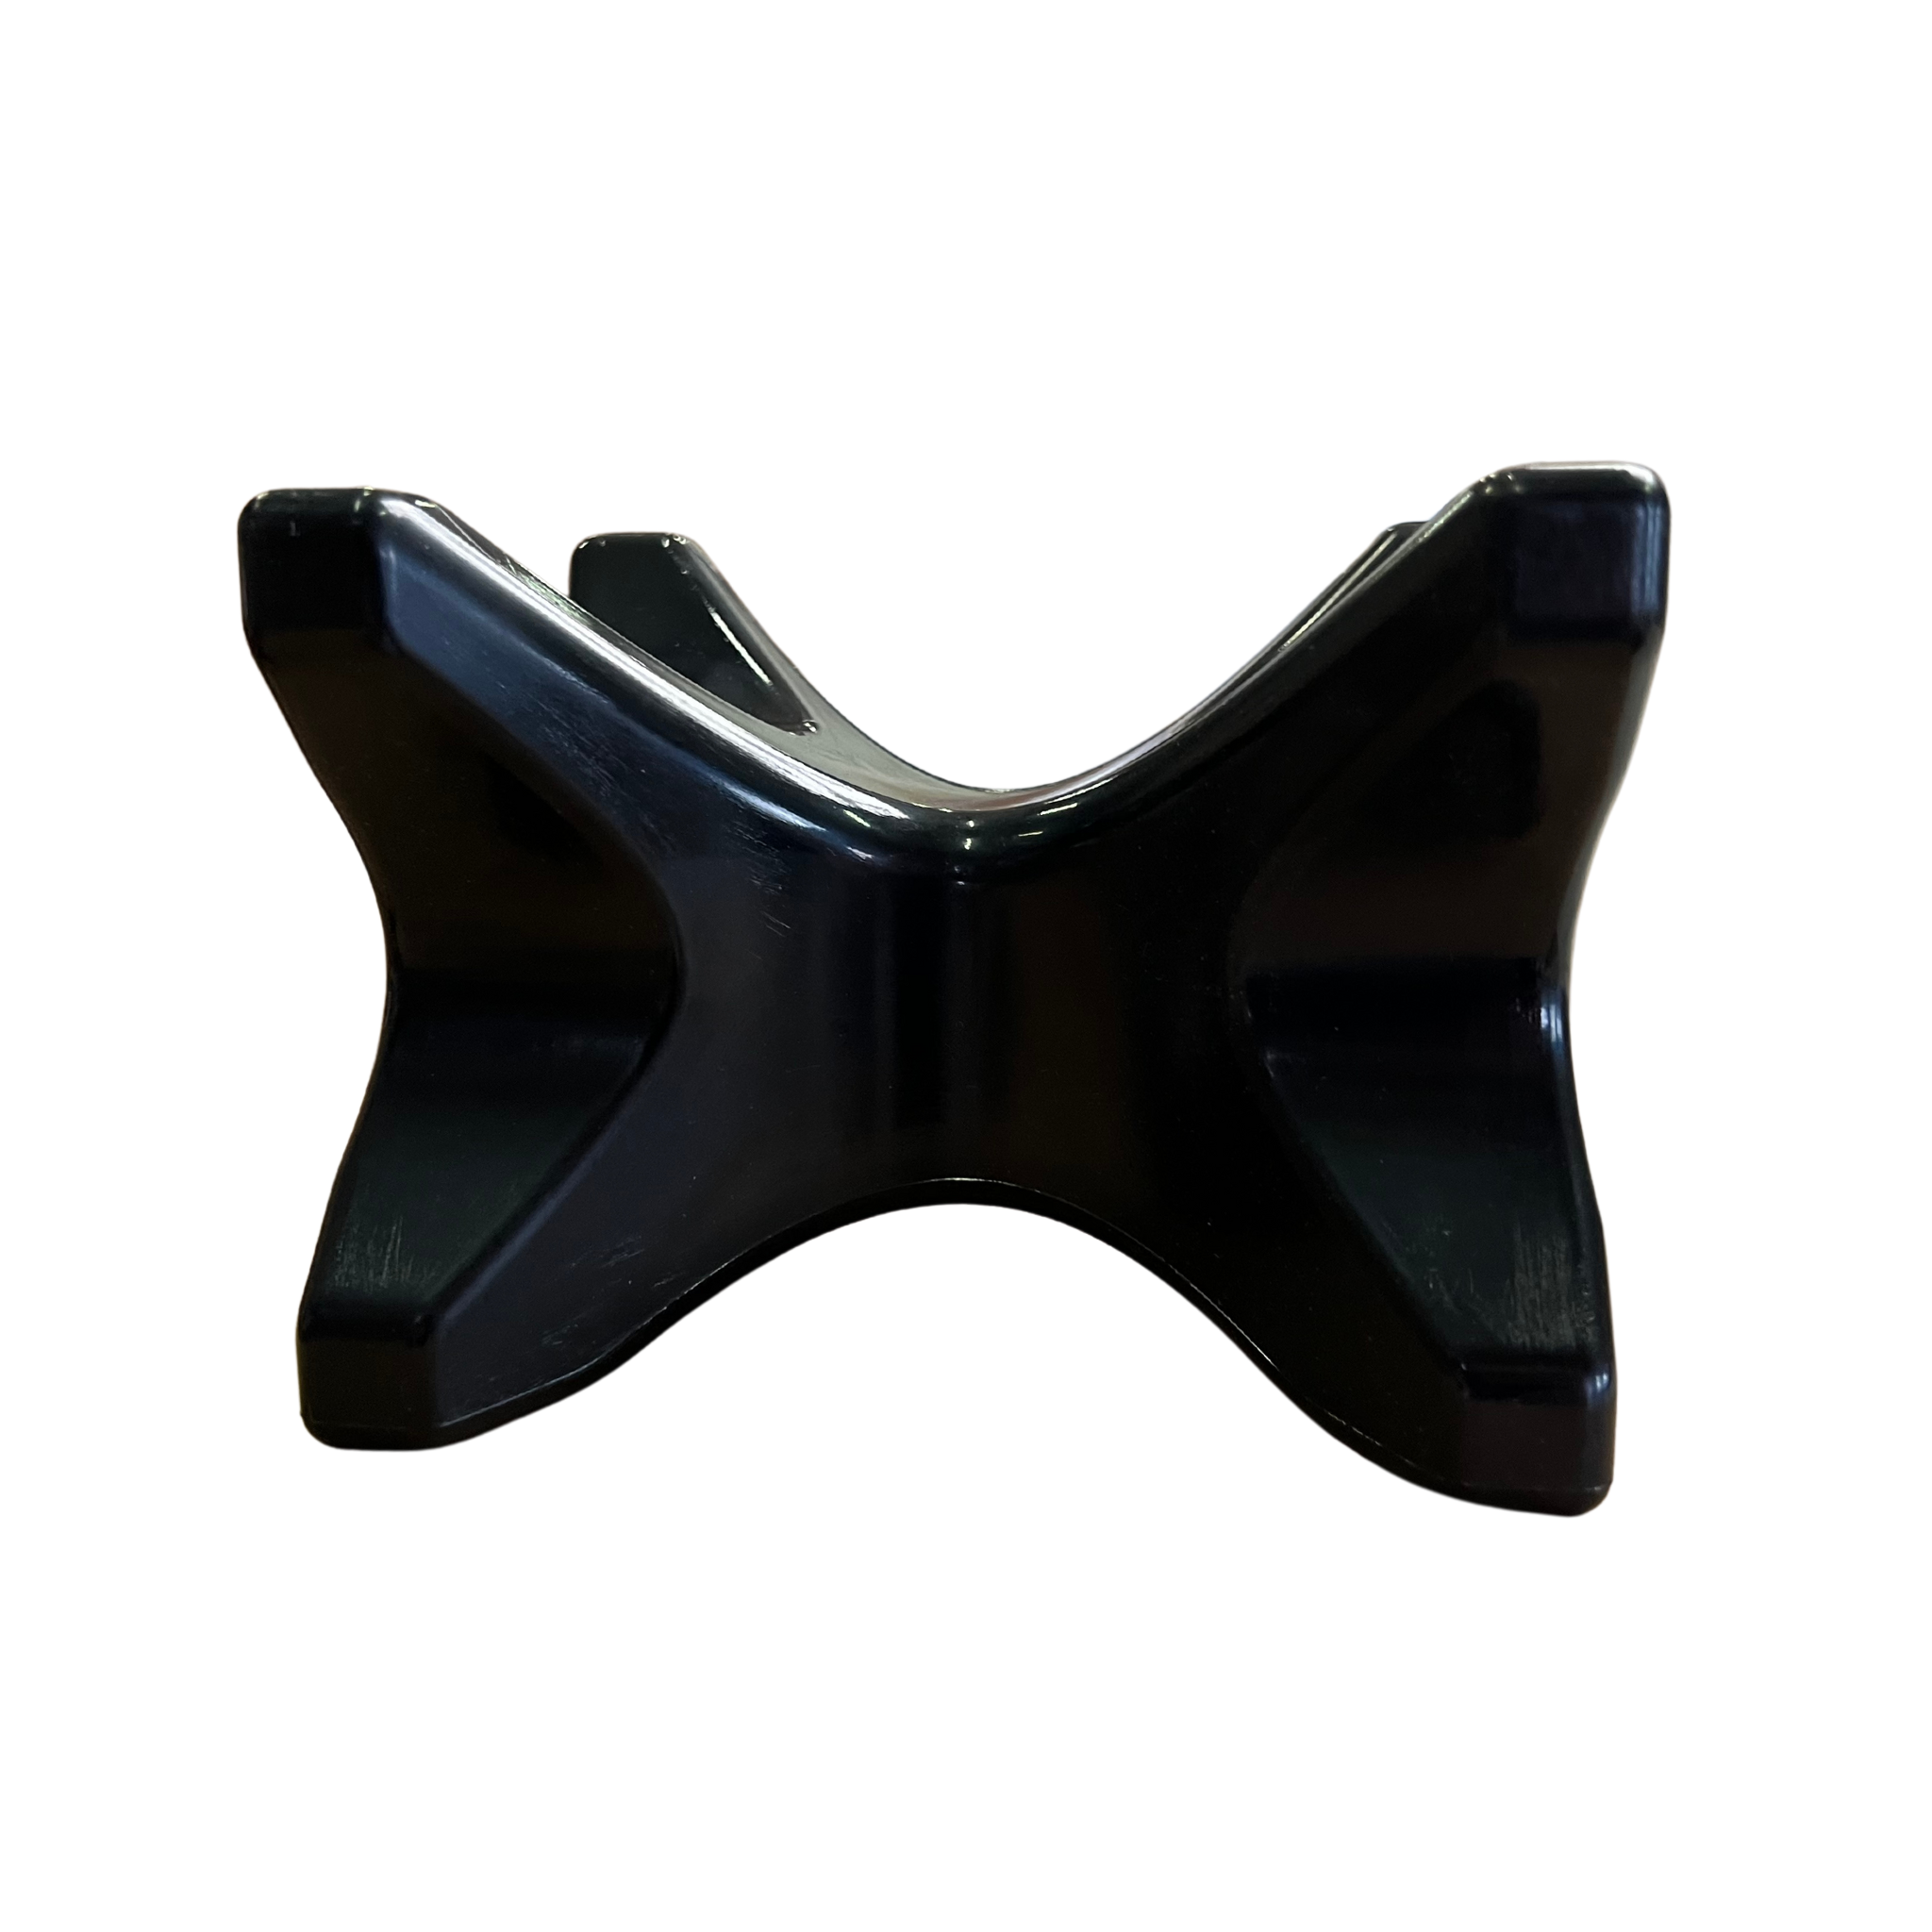 Headrest black / plastic